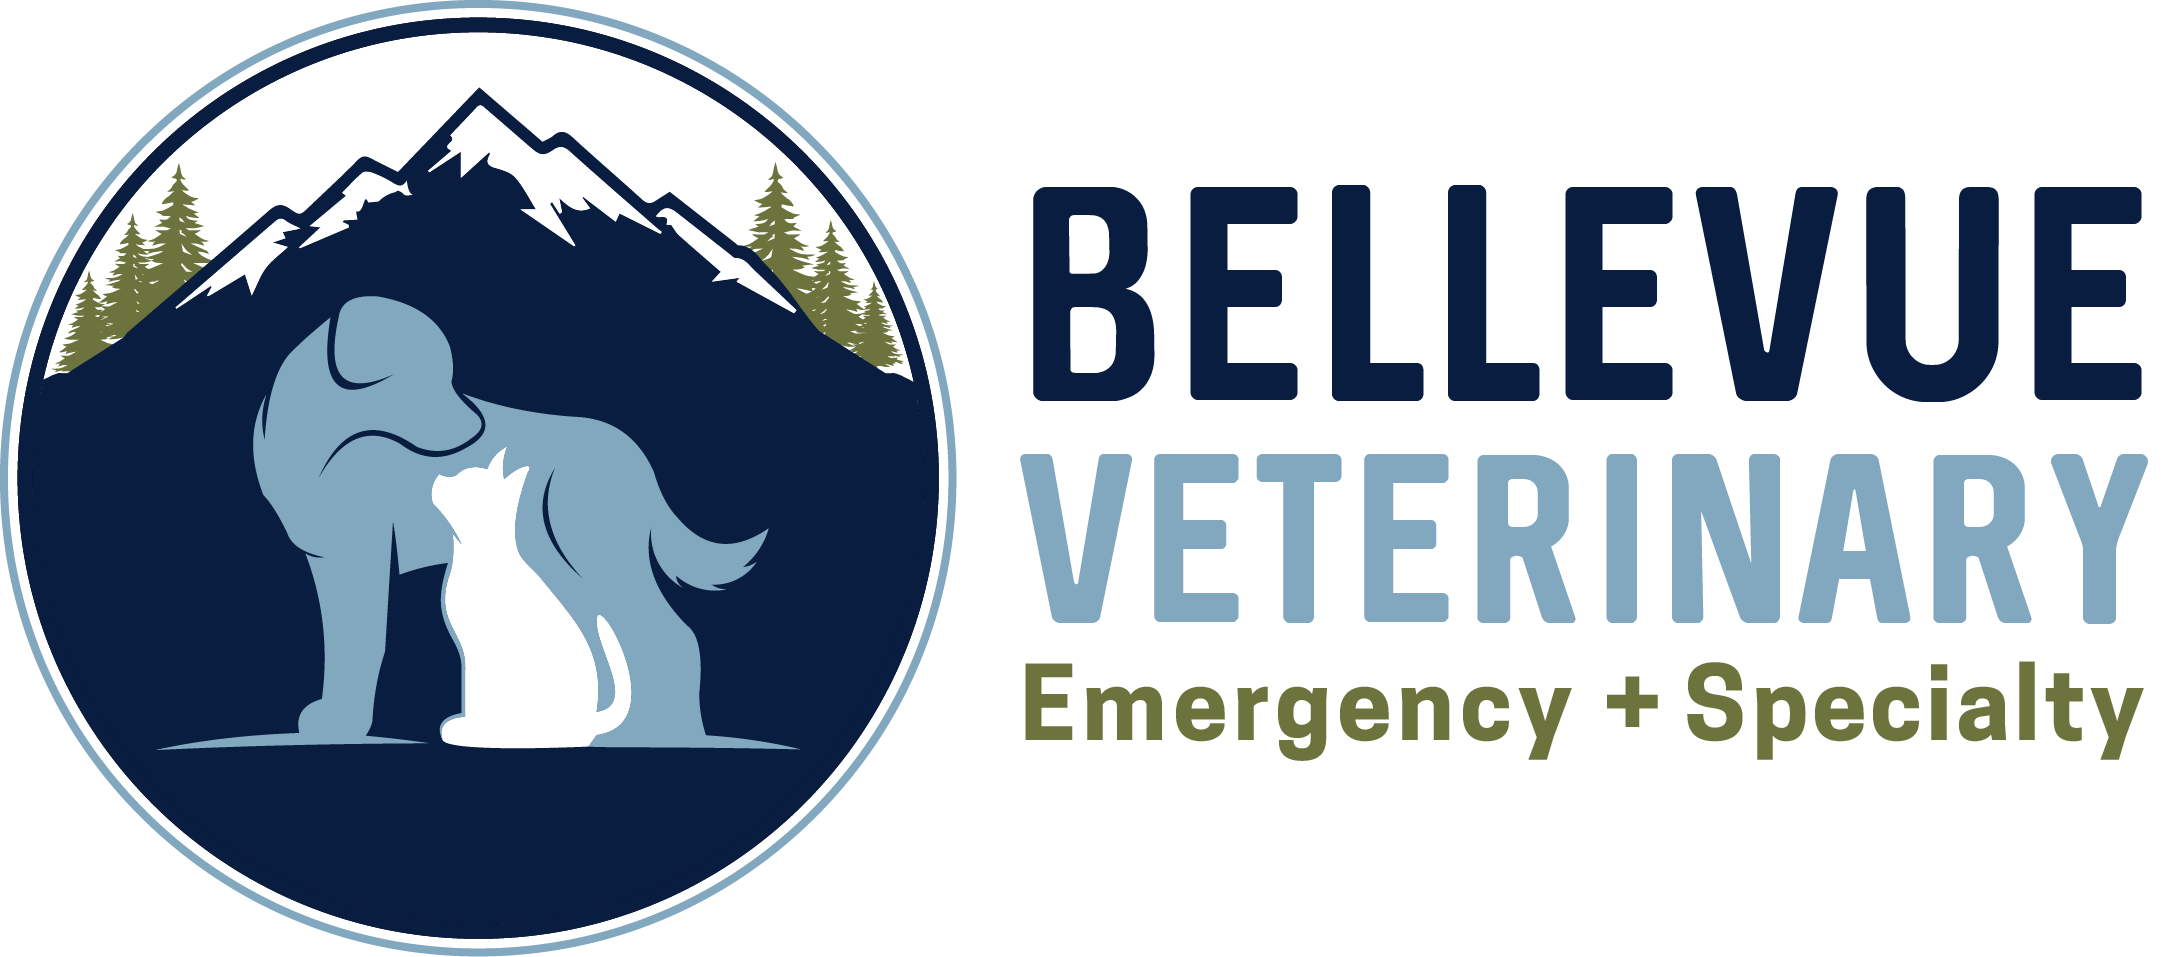 Bellevue Veterinary Emergency & Specialty Logo